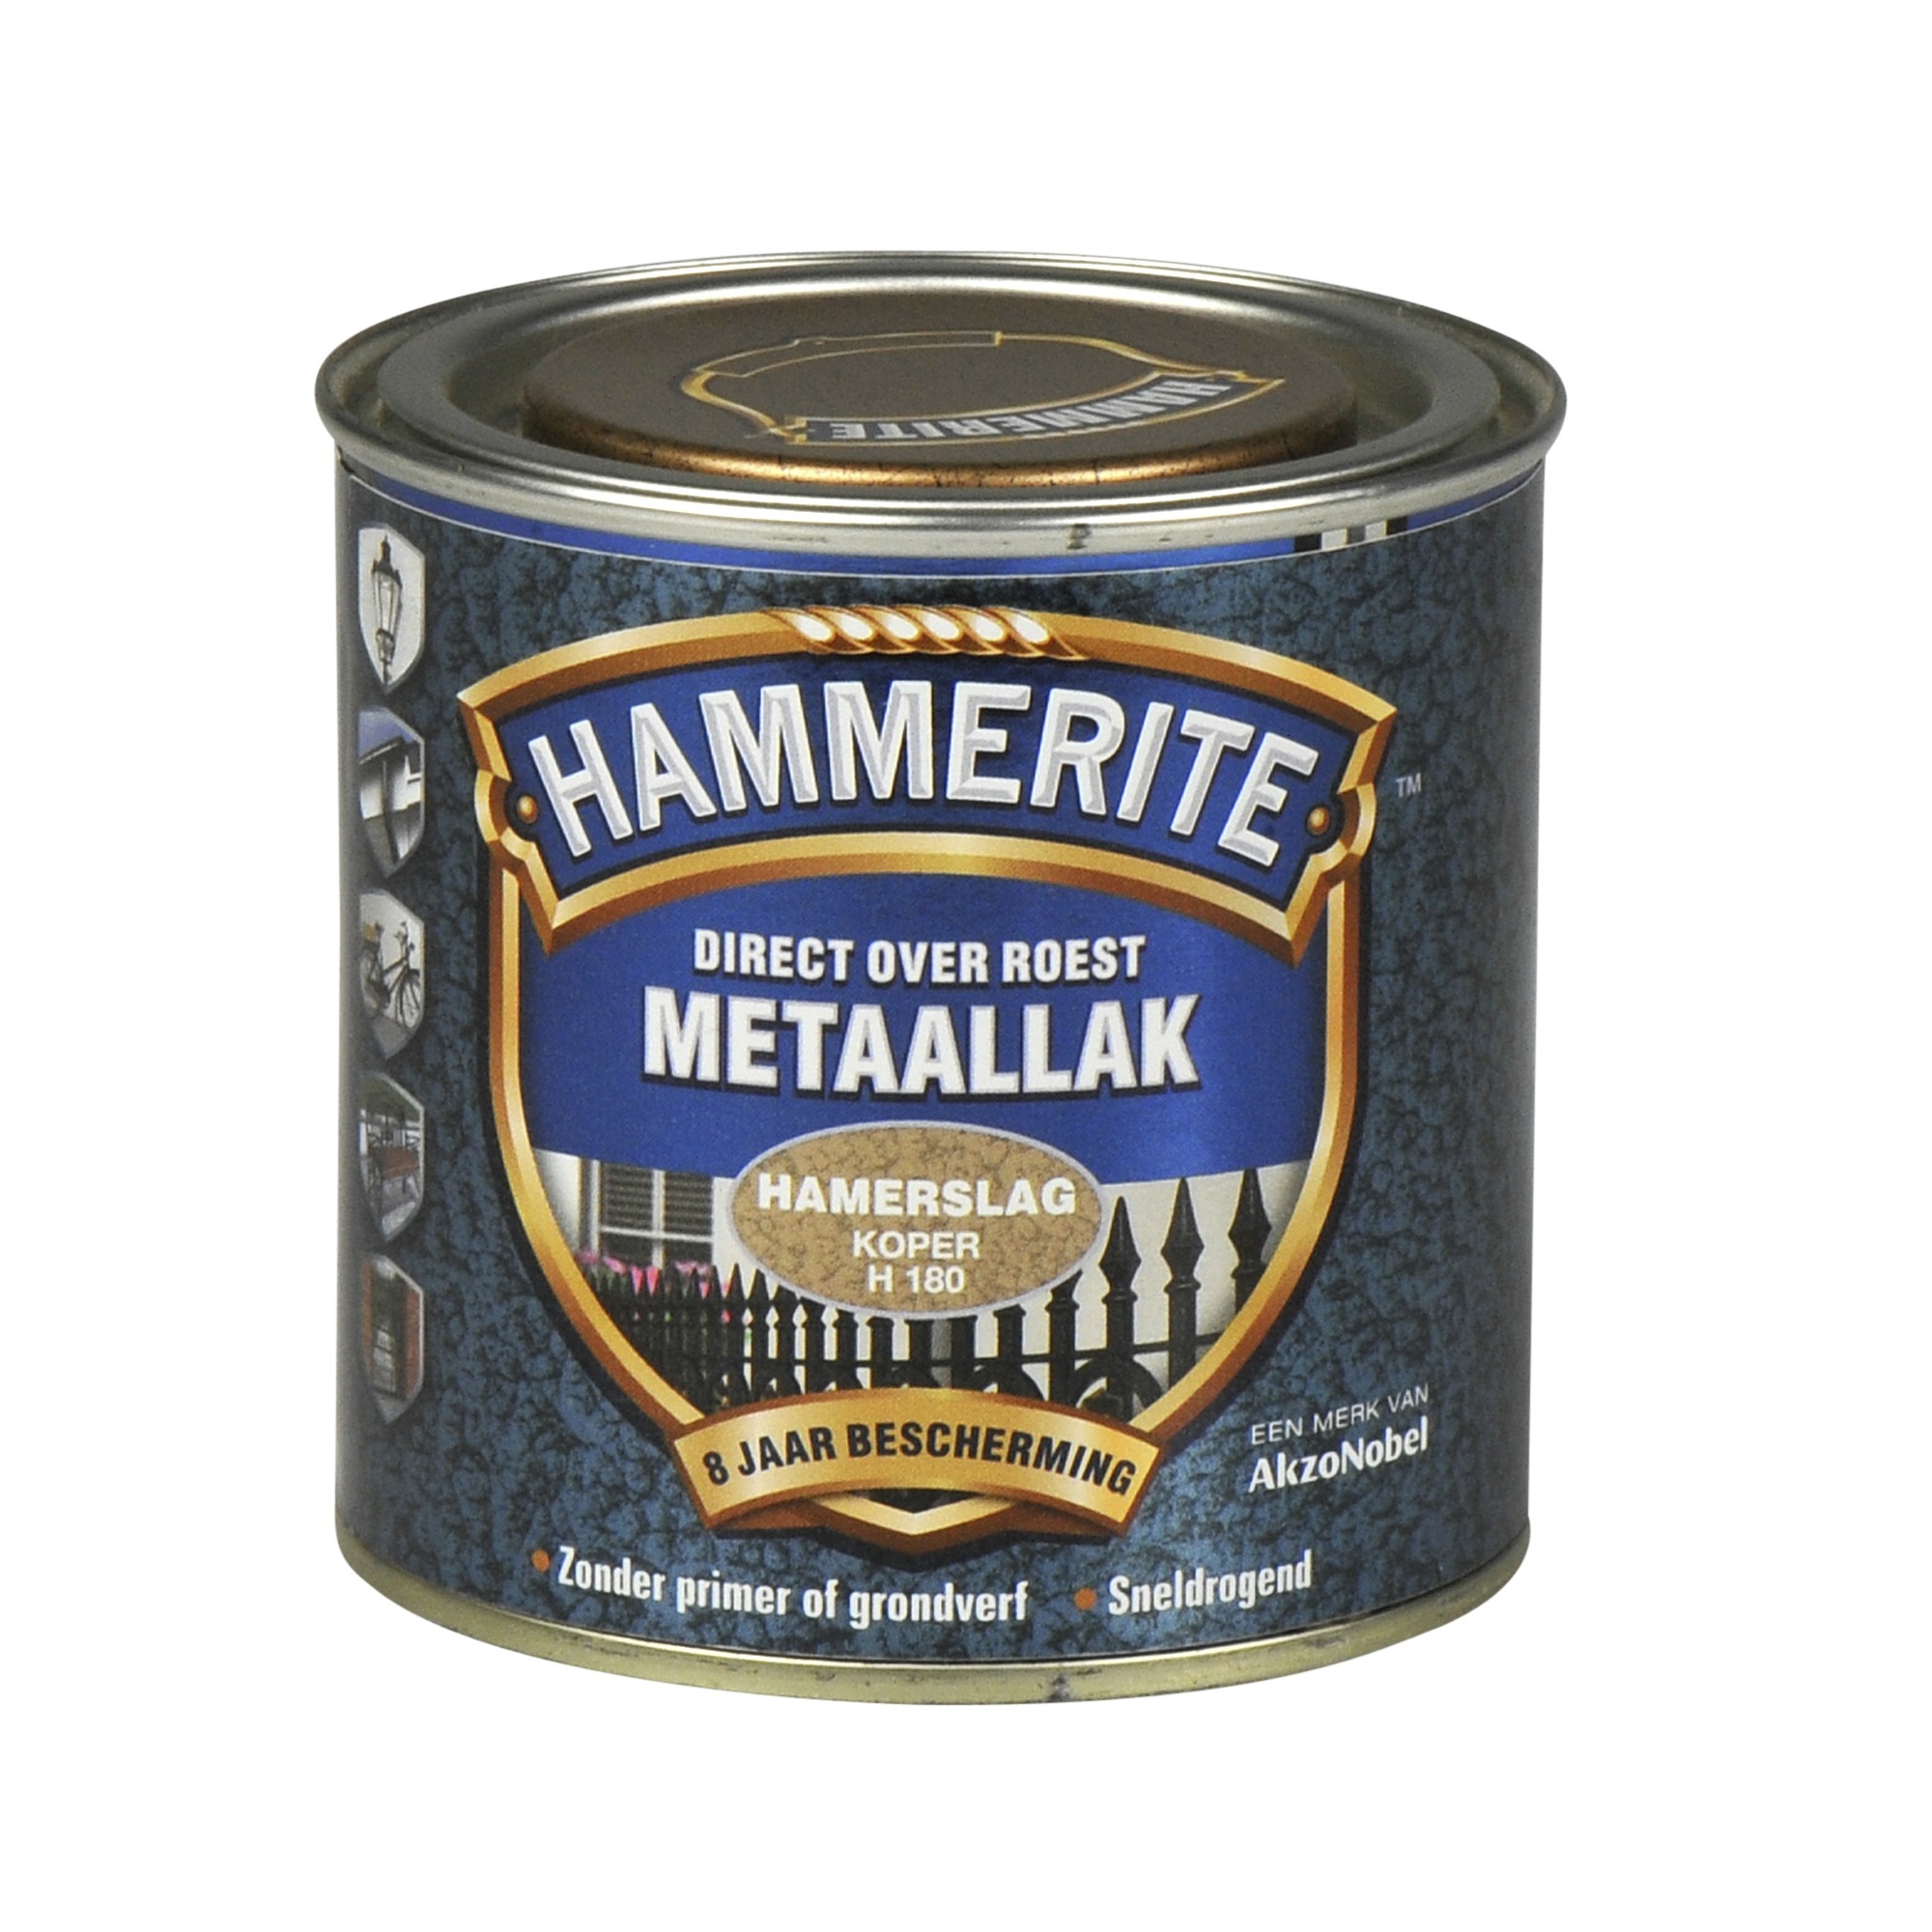 Hammerite direct over roest metaallak hamerslag koper - 250 ml